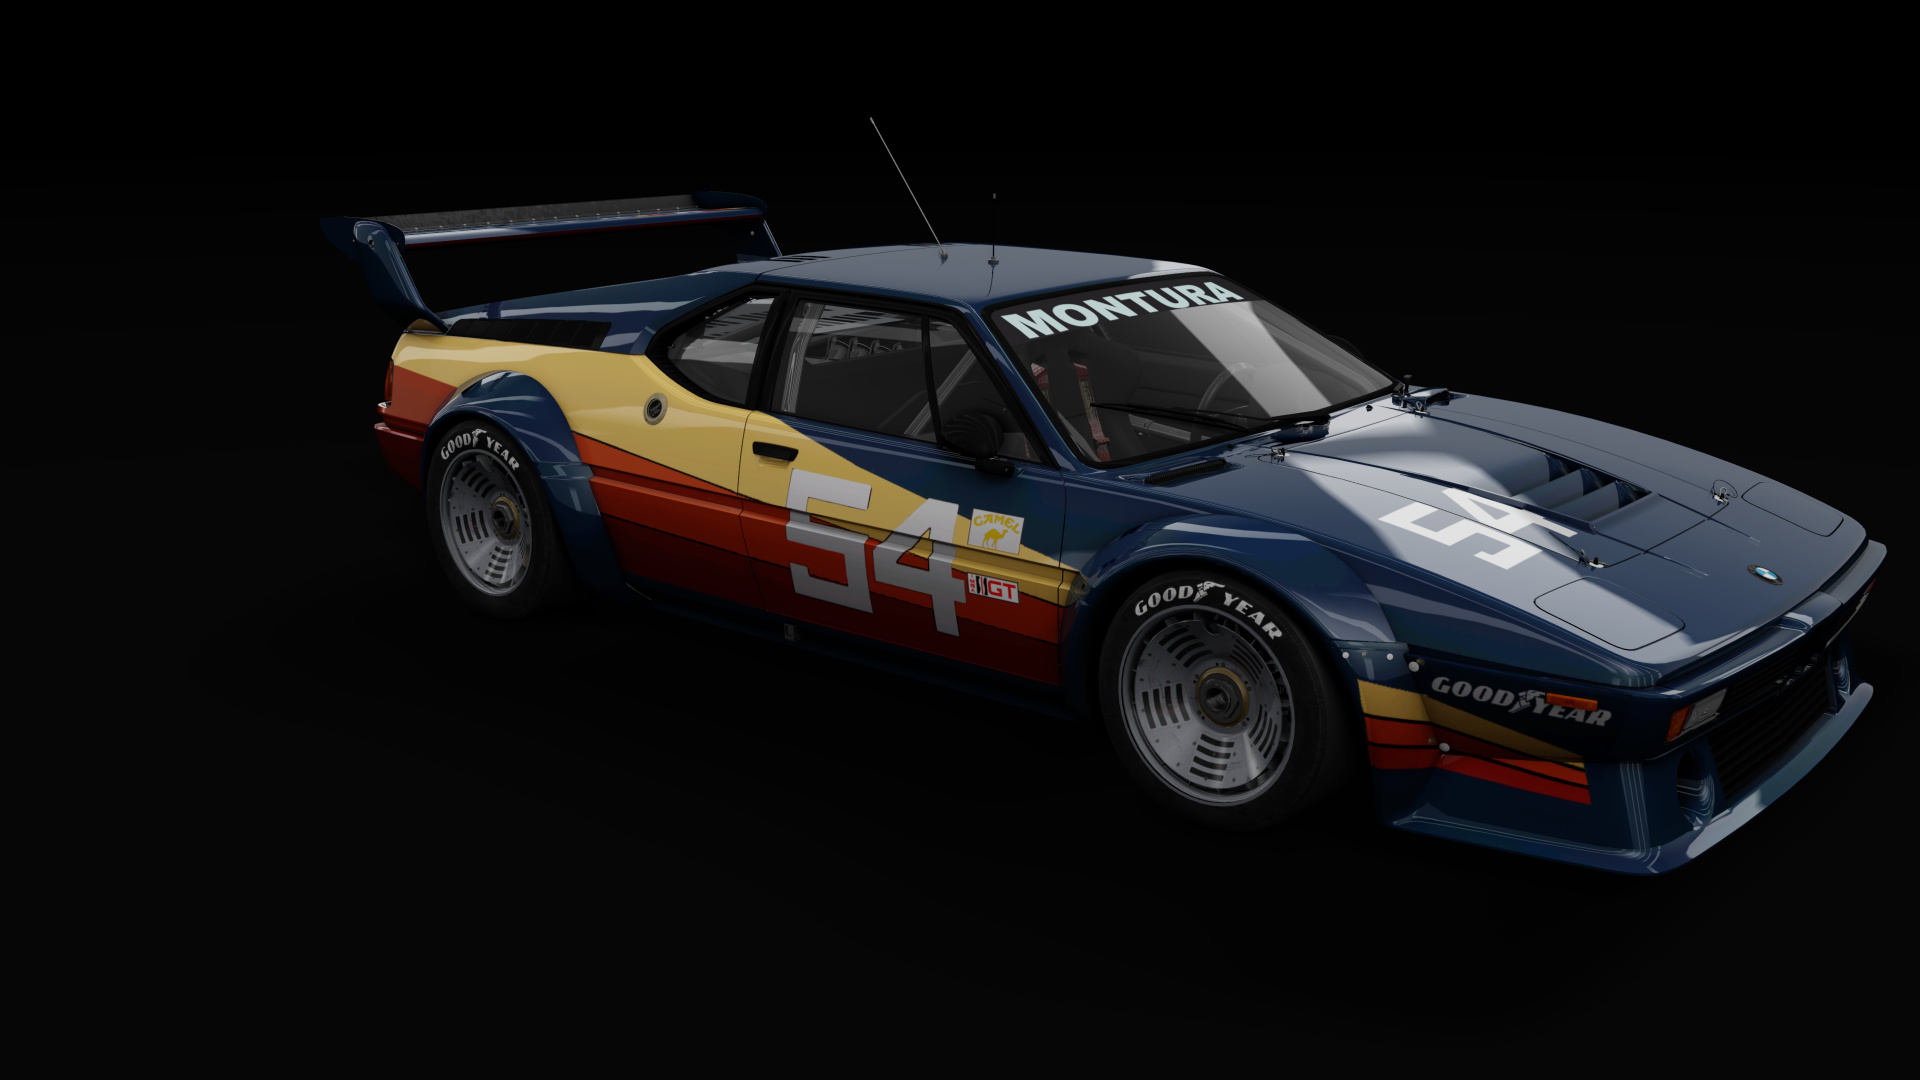 3K -BMW M1- IMSA GTO 1981, 6 Hours of Mosprt | RaceDepartment